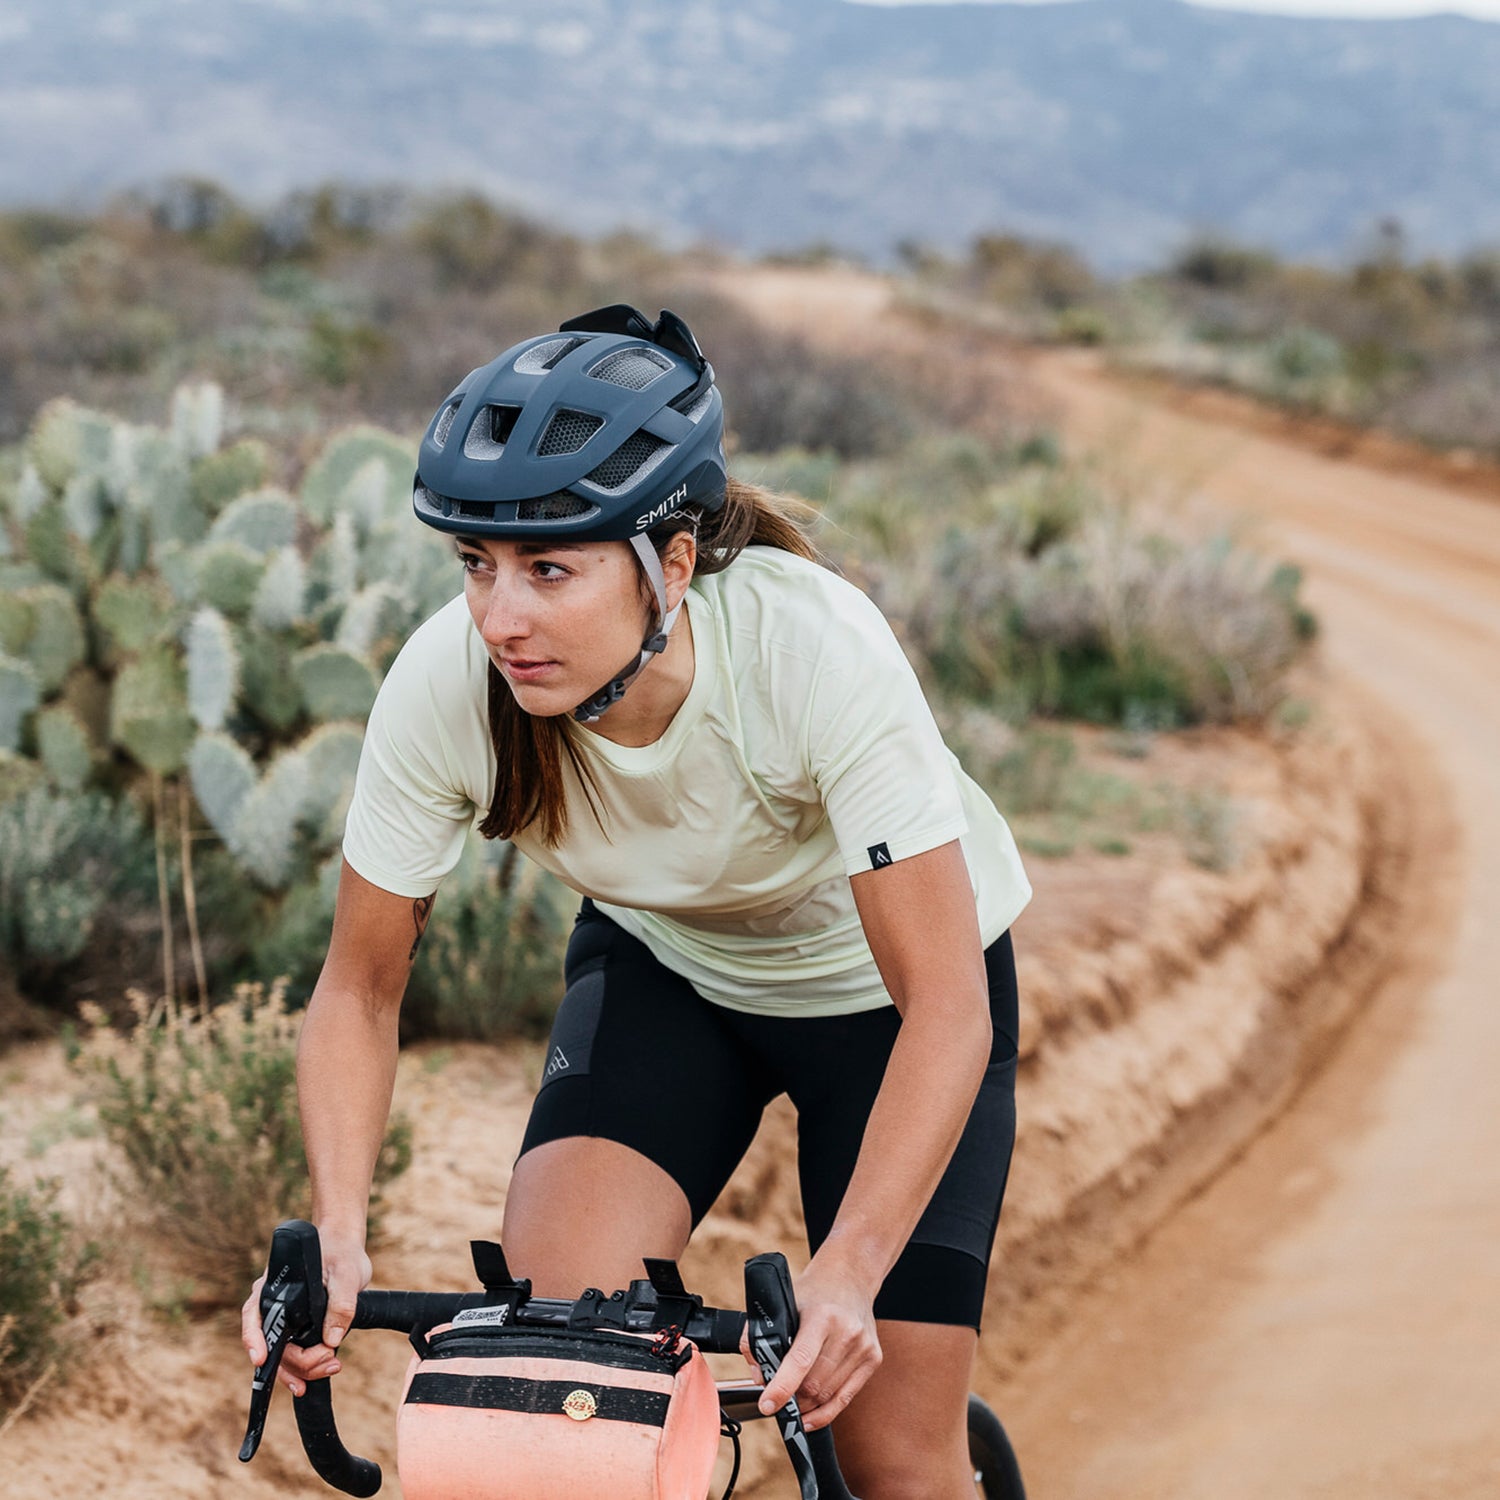 Gravel bike clothing: what should I wear for gravel riding? - BikeRadar